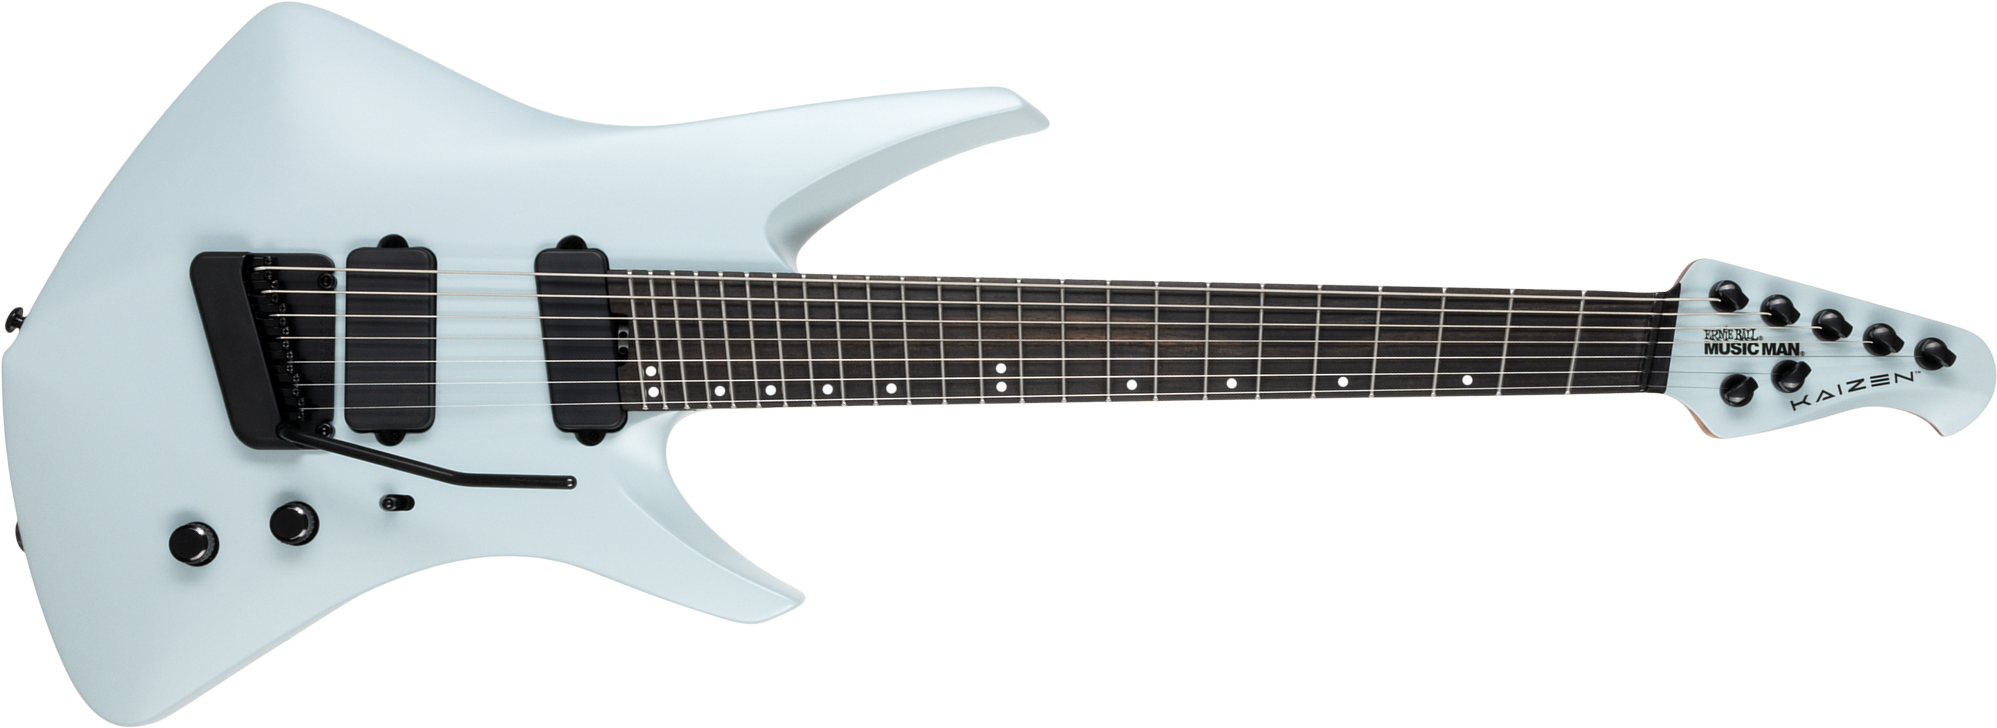 Music Man Tosin Abasi Kaizen 7c Signature Multiscale 2h Trem Eb - Mint - Multi-Scale Guitar - Main picture